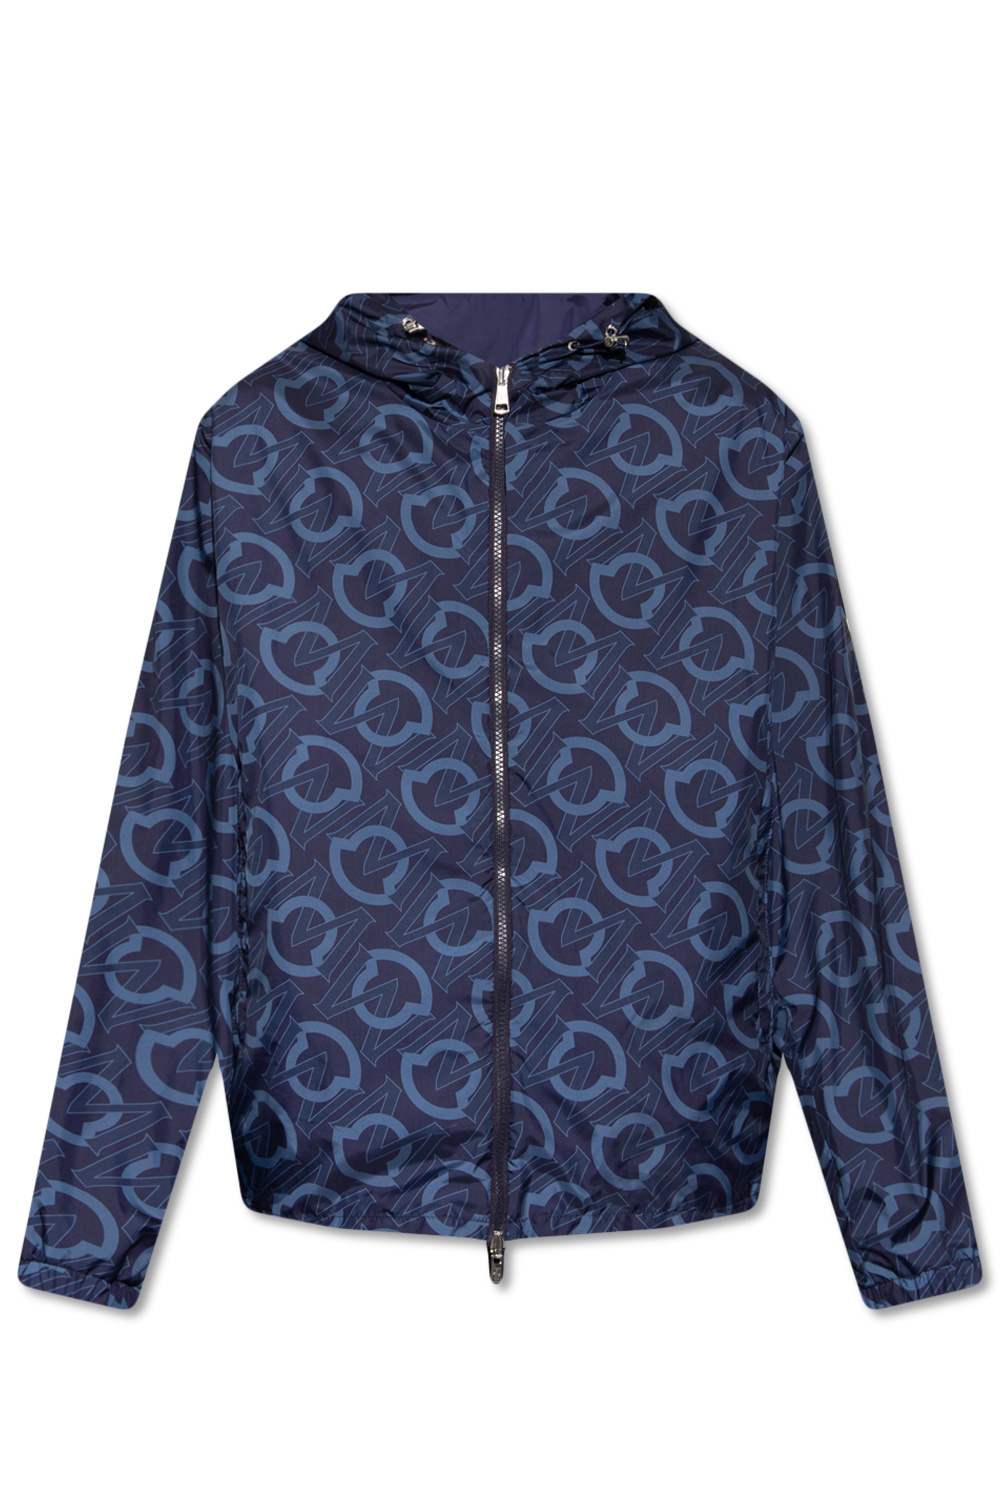 Navy blue ‘Cretes’ reversible hooded jacket Moncler - Vitkac GB